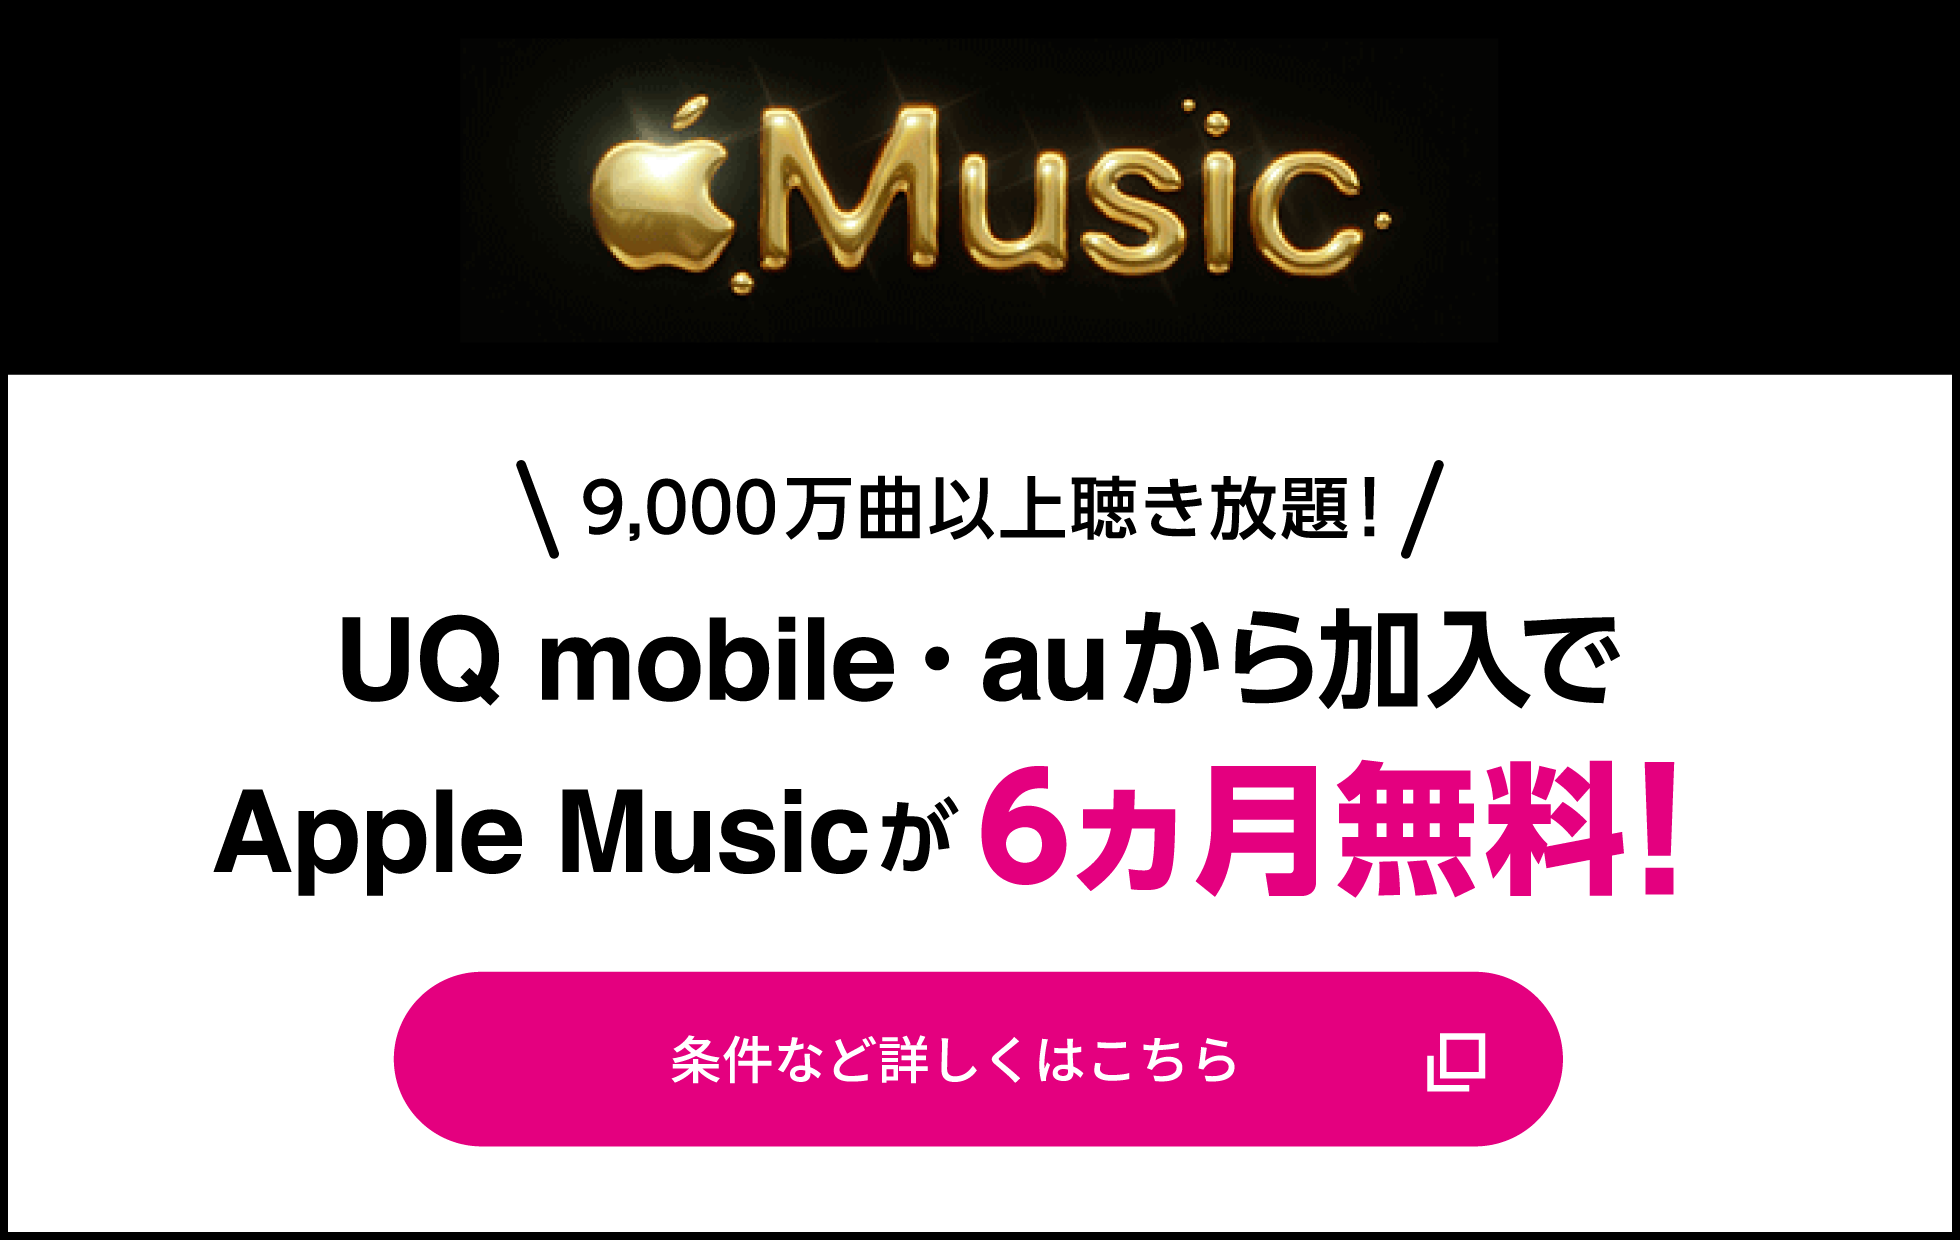 UQ mobile・auから加入でApple Musicが6ヵ月無料！　条件など詳しくはこちら